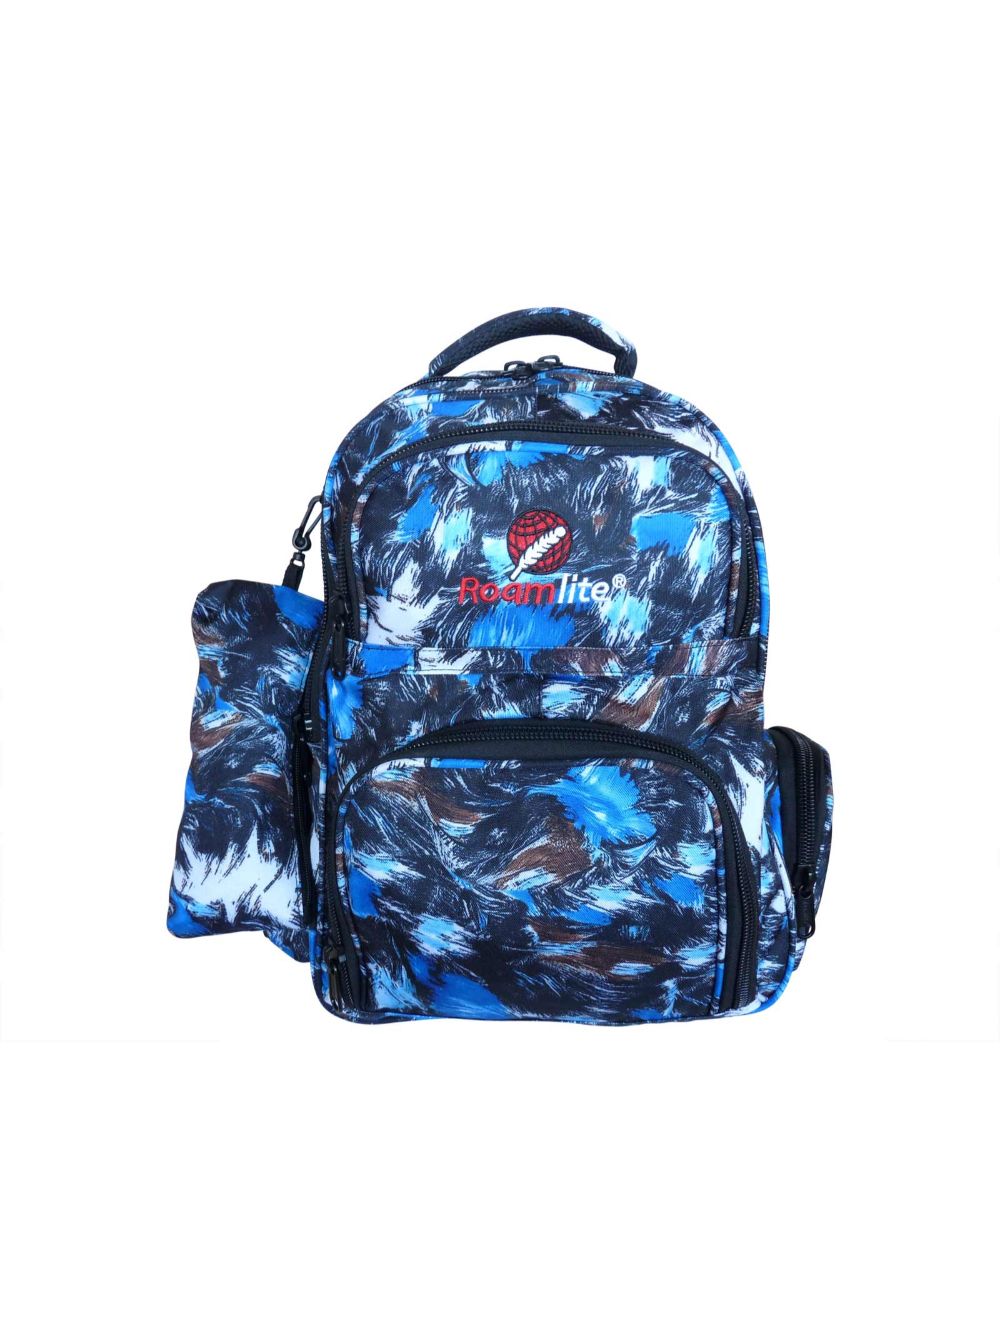 Roamlite Childrens Backpack Blue Paint pattern RL839 top